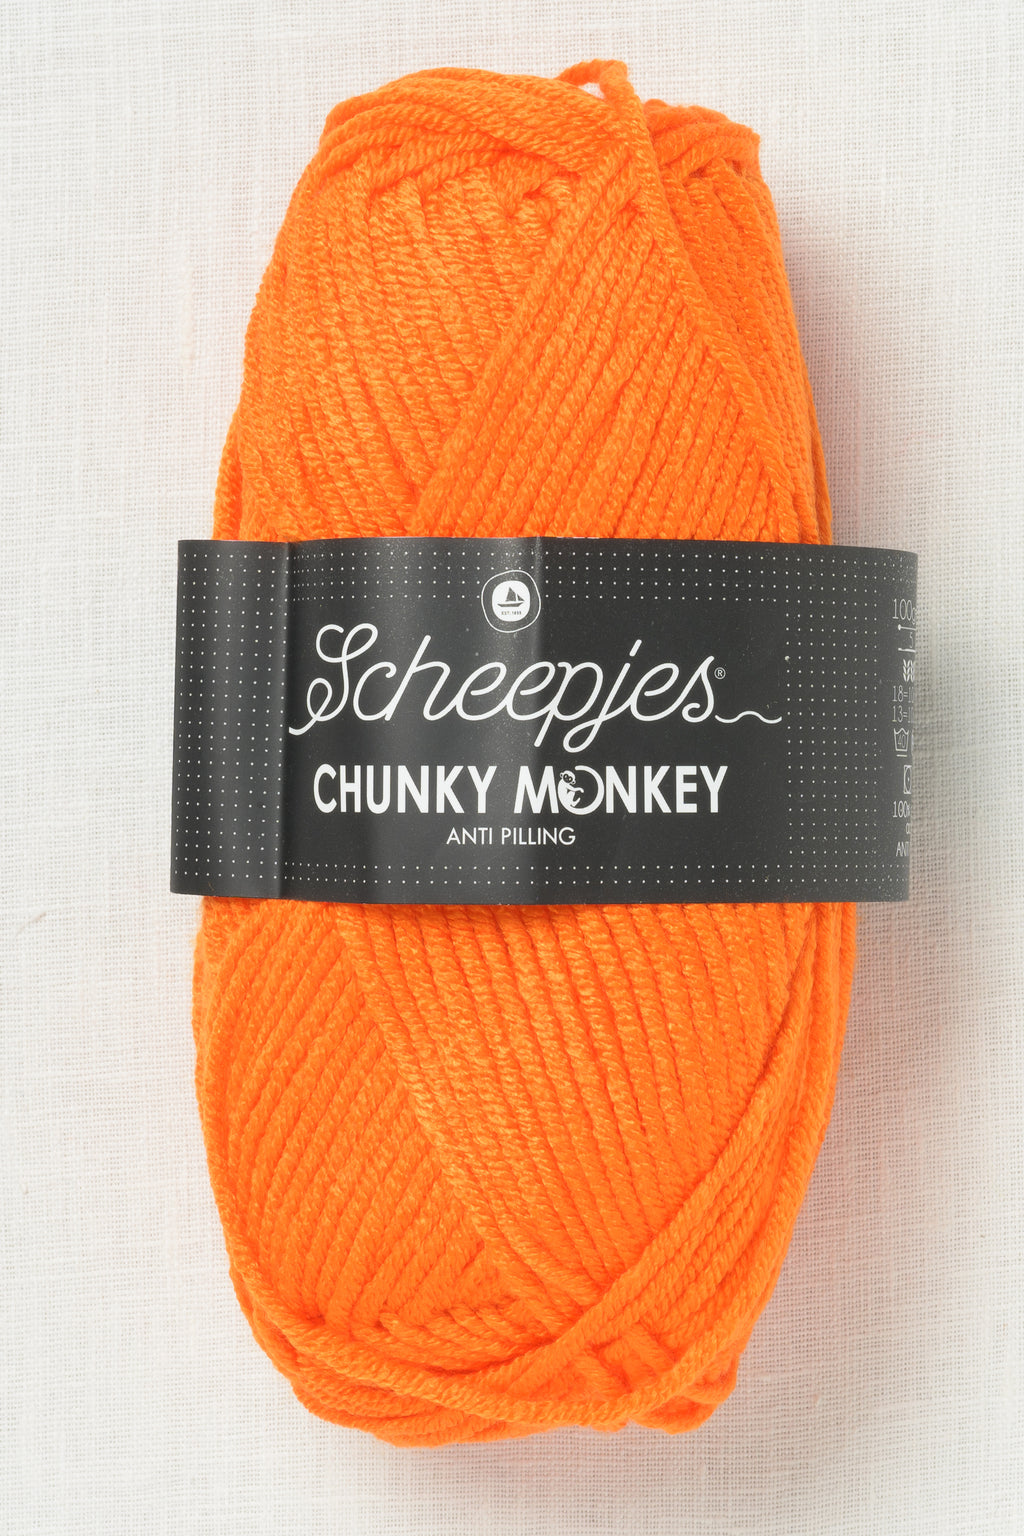 Scheepjes Chunky Monkey 2002 Orange